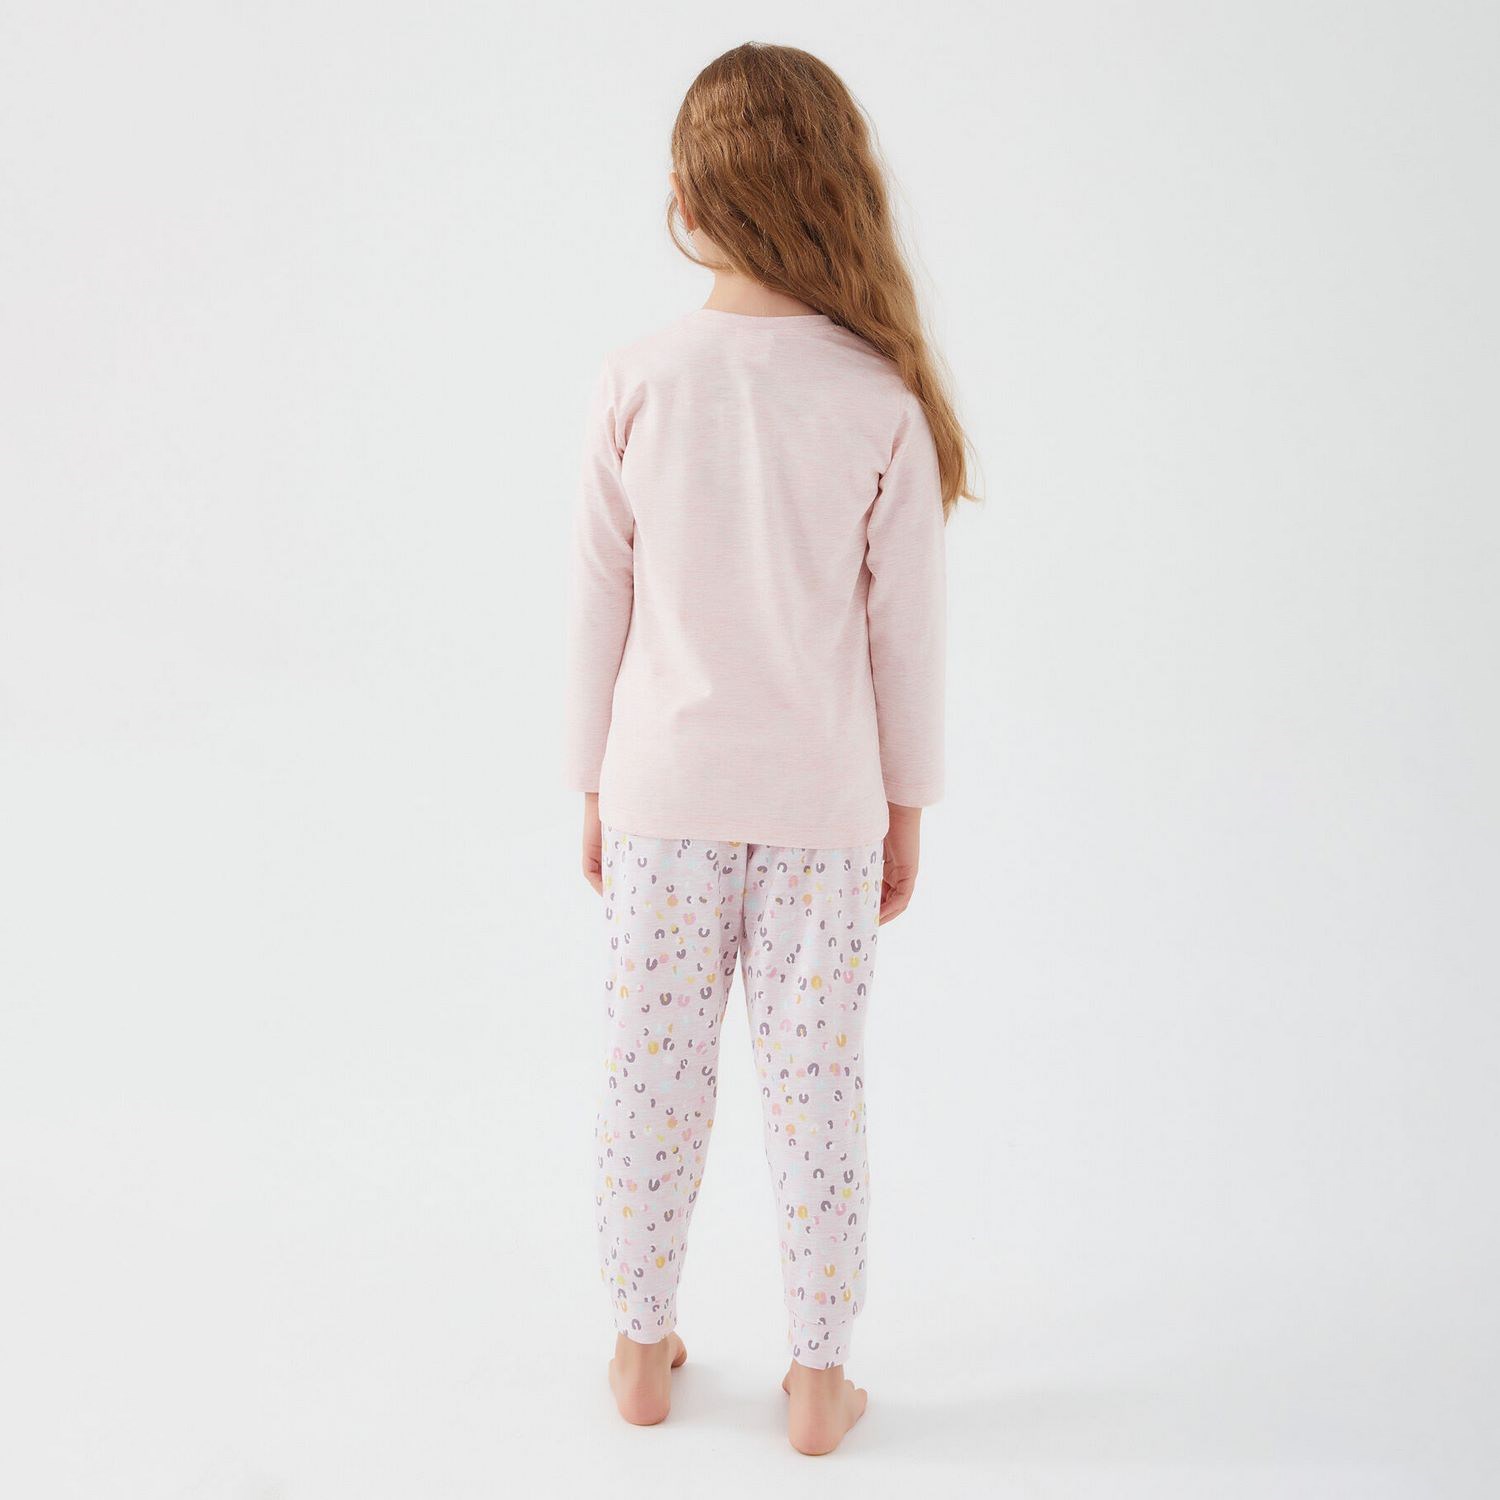 Roly Poly Kız Çocuk Pijama Takımı RP3098 Pembe Melanj